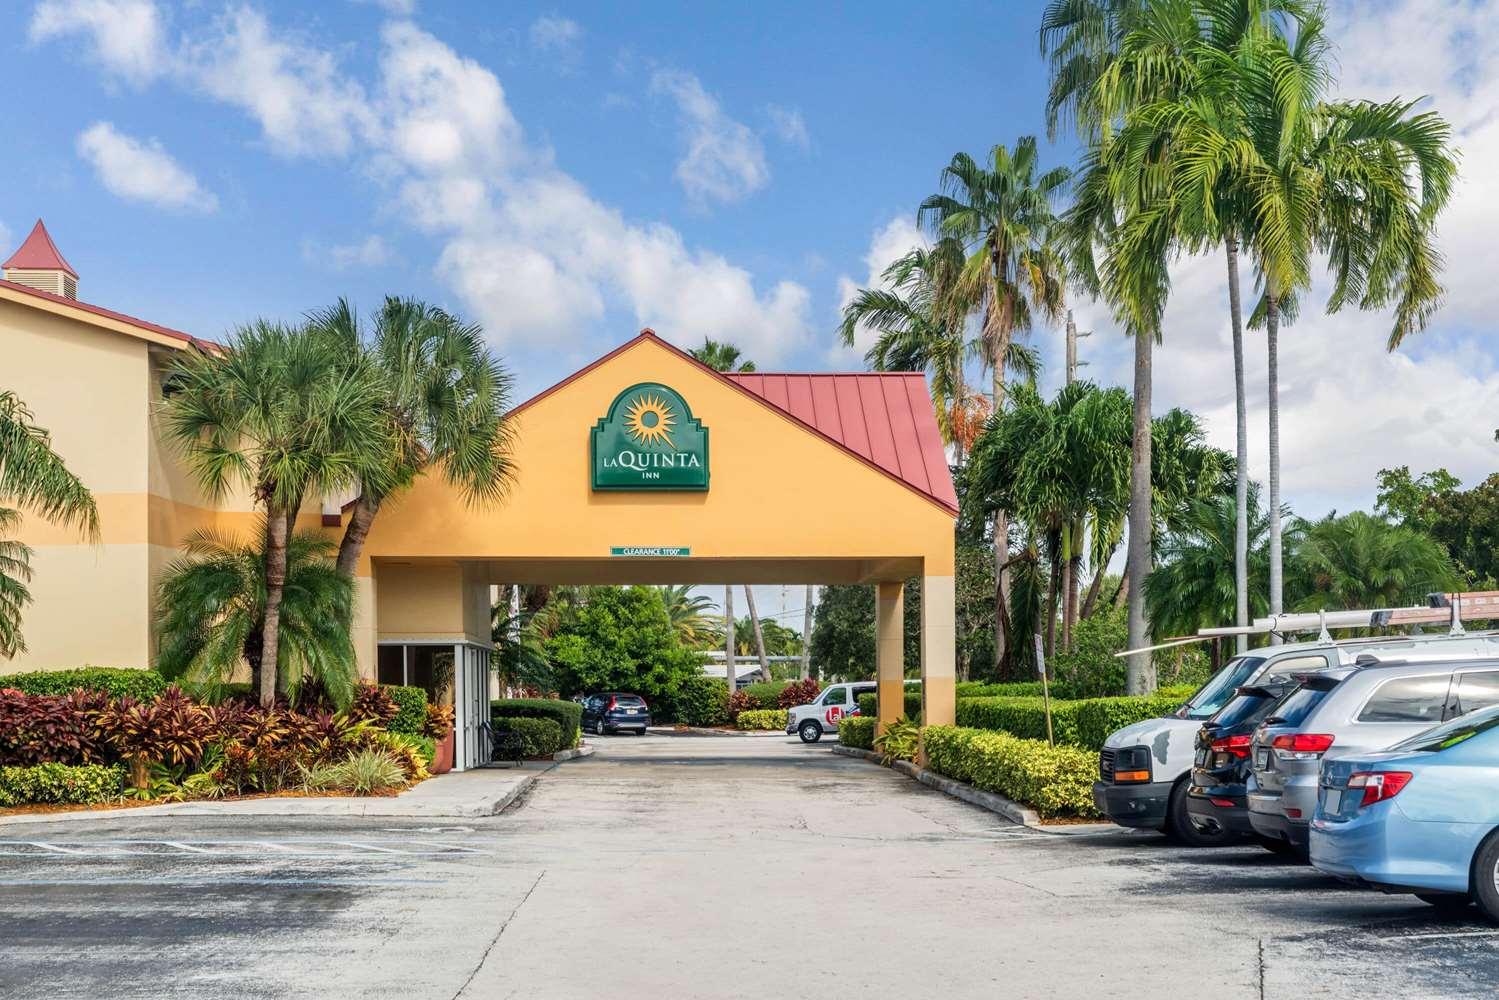 La Quinta Inn by Wyndham Ft. Lauderdale Northeast in Fort Lauderdale, FL